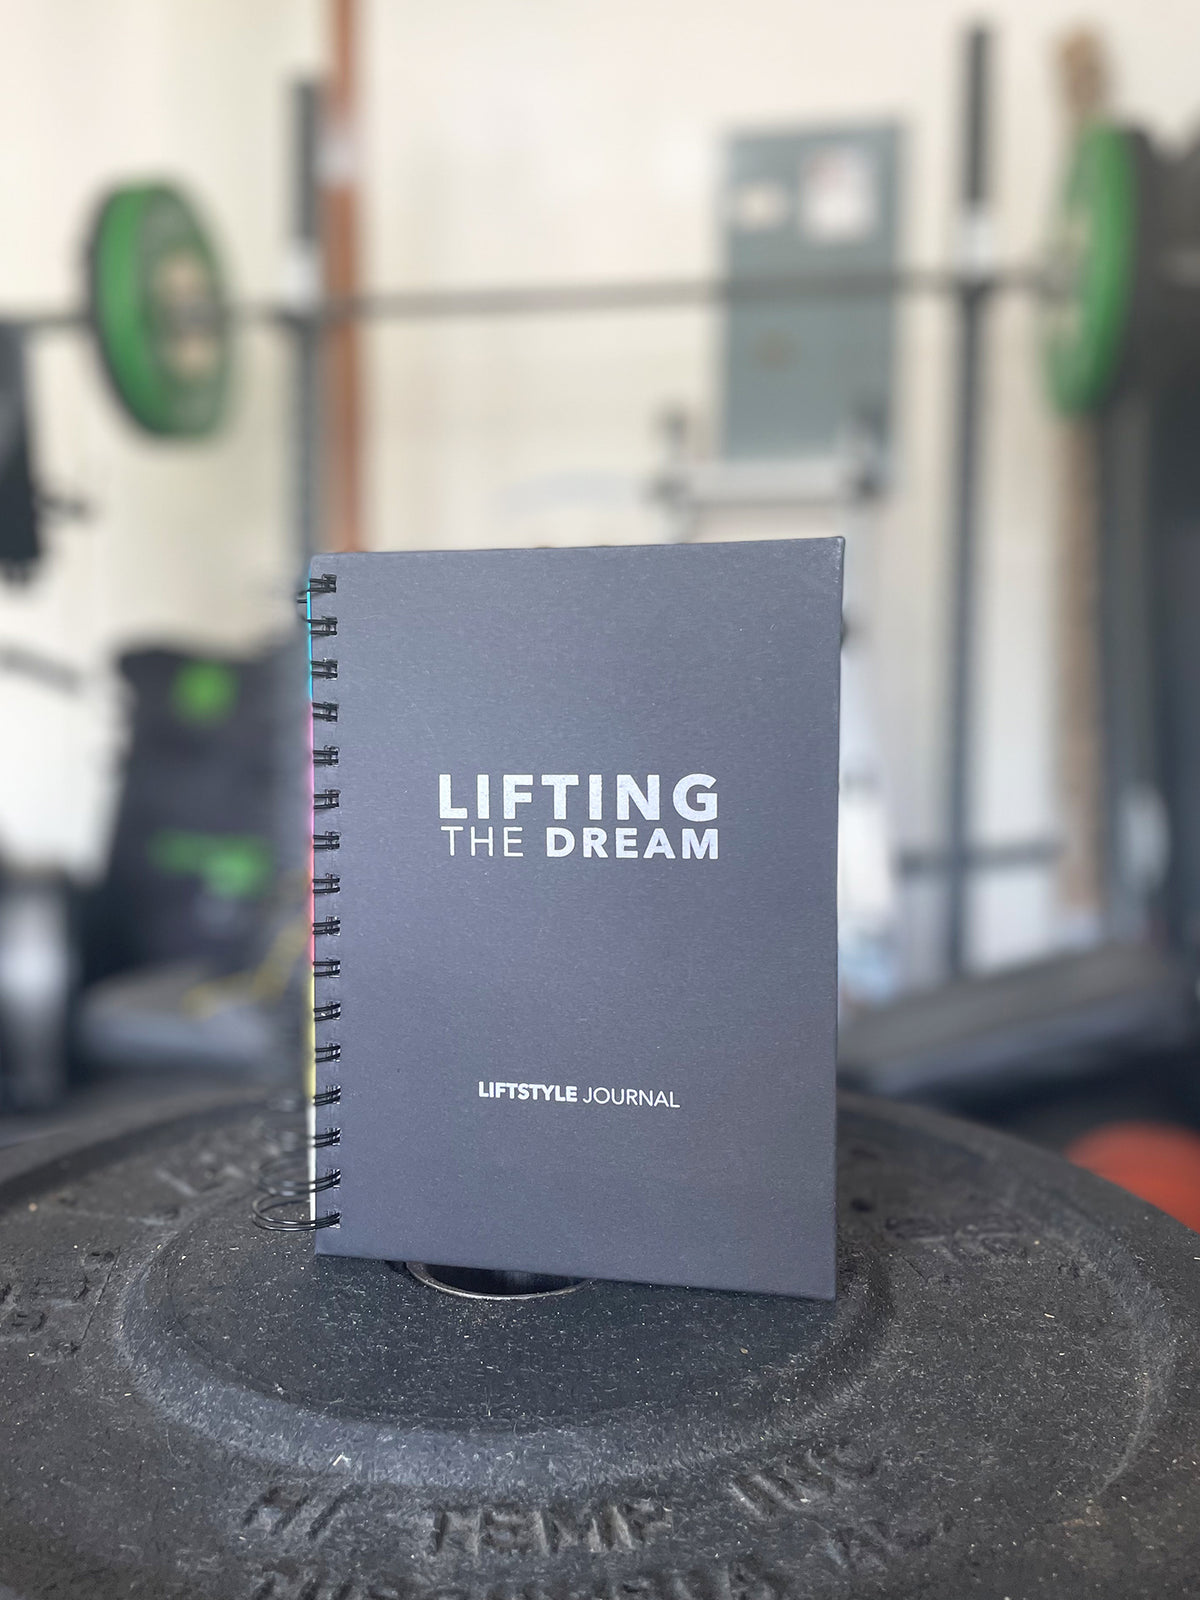 Liftstyle™ Journal